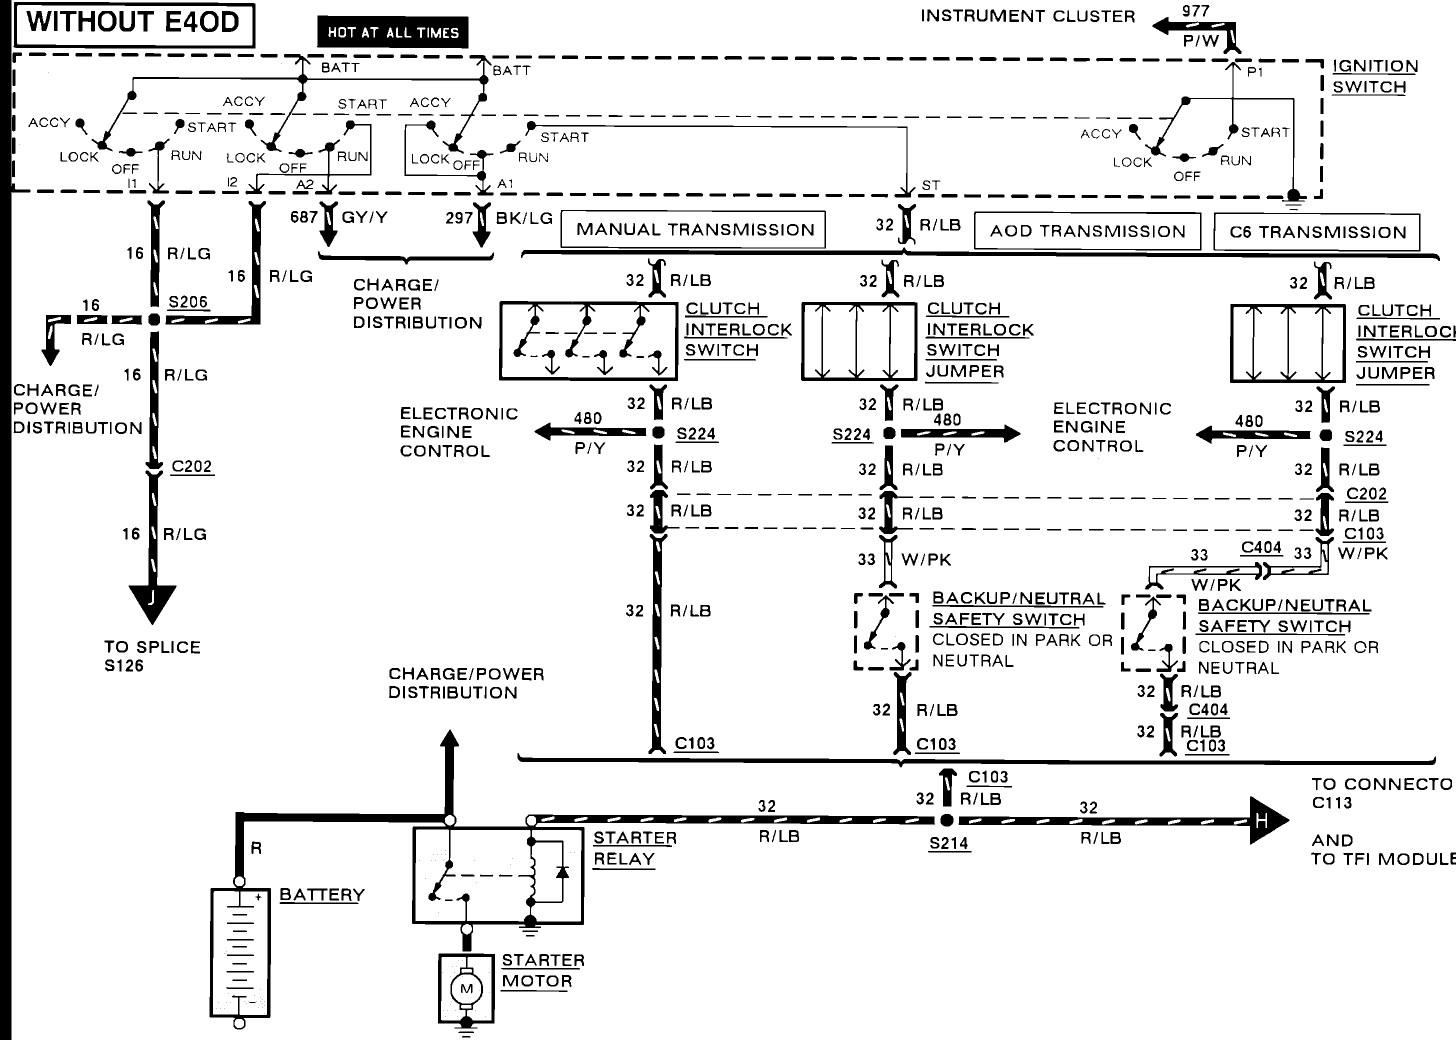 Ford Aod Neutral Safety Switch Wiring Diagram from schematron.org